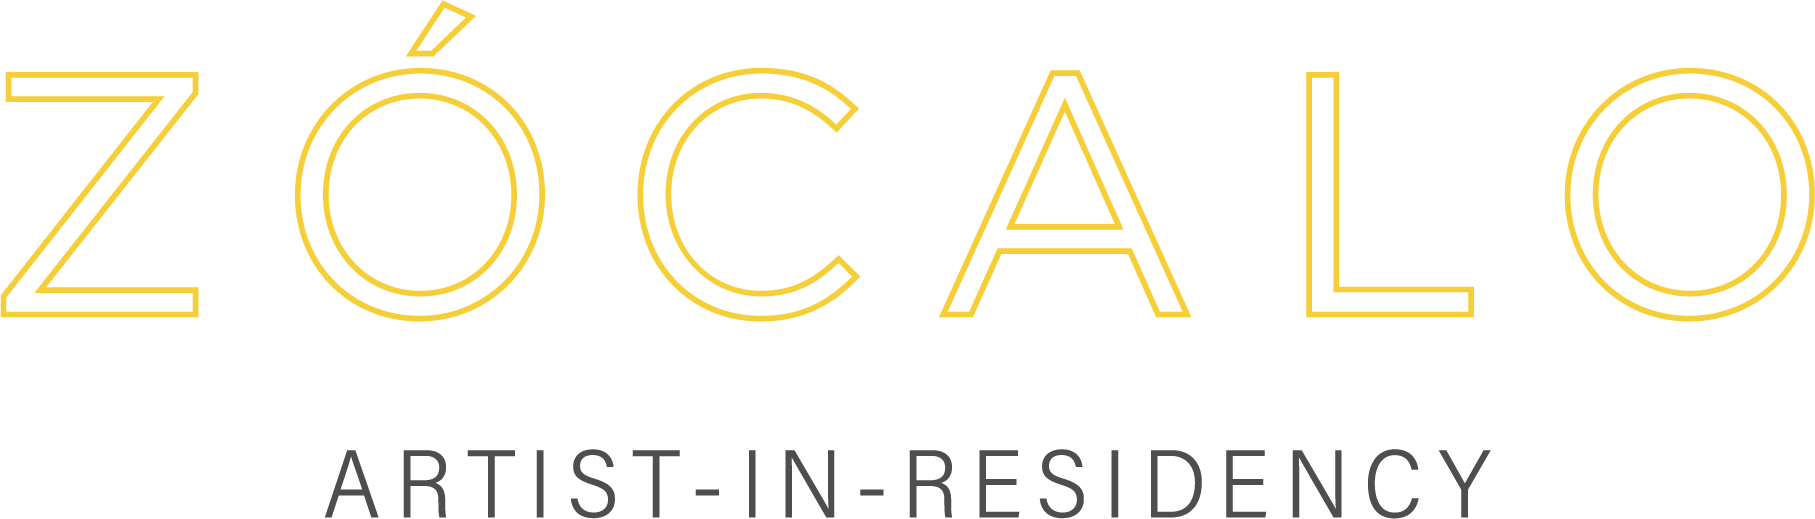 Zocalo Artist Residency Logo